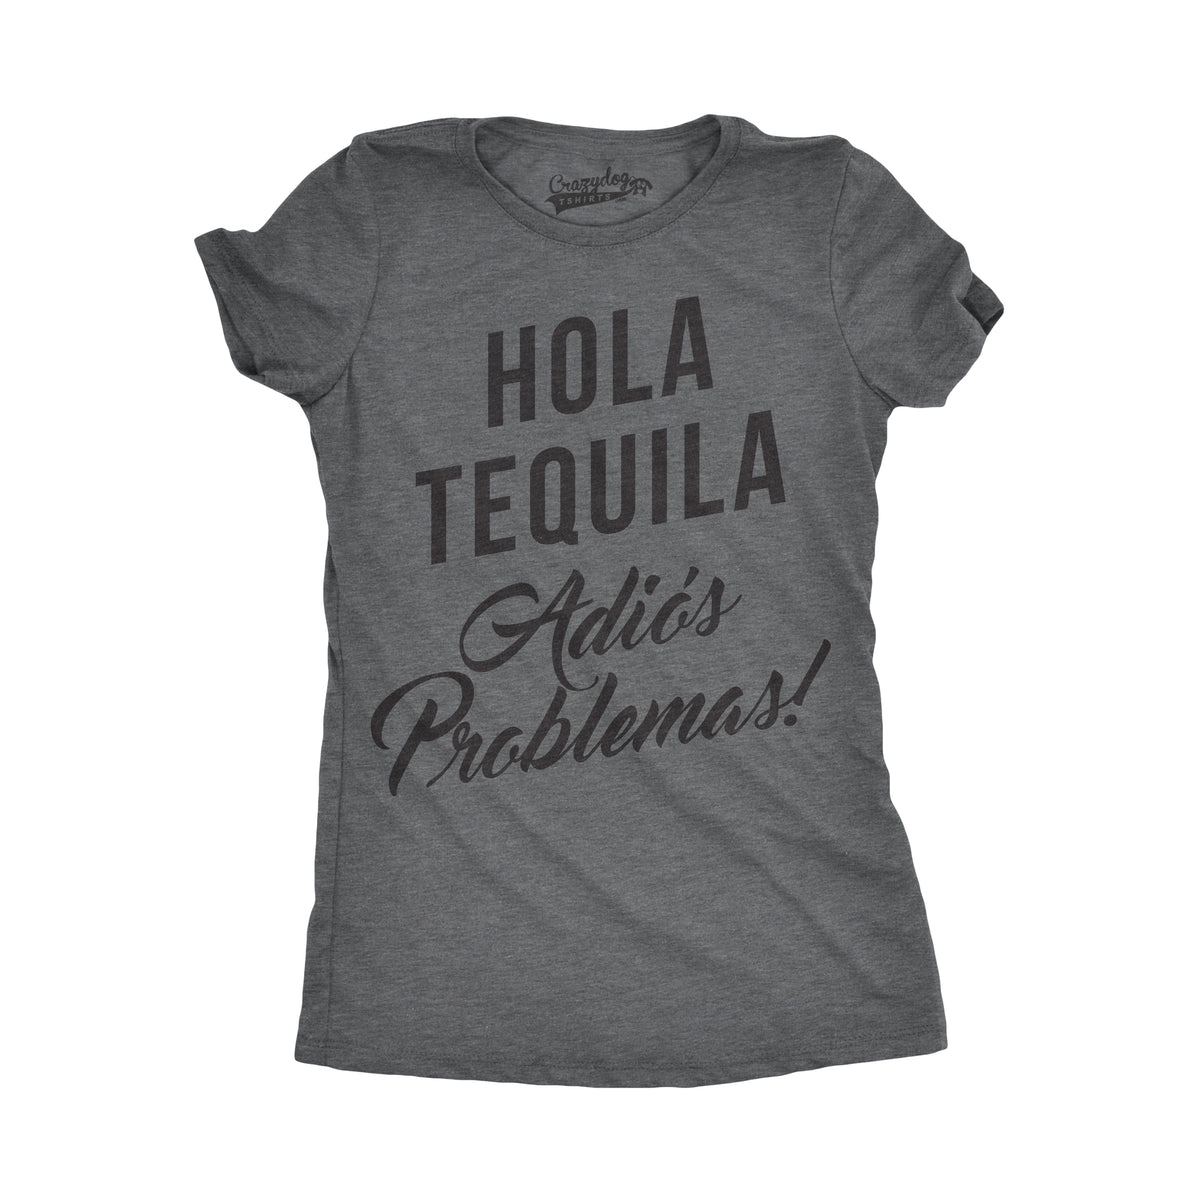 Funny Dark Heather Grey Hola Tequila Adios Problemas Womens T Shirt Nerdy Cinco De Mayo Drinking Retro Tee